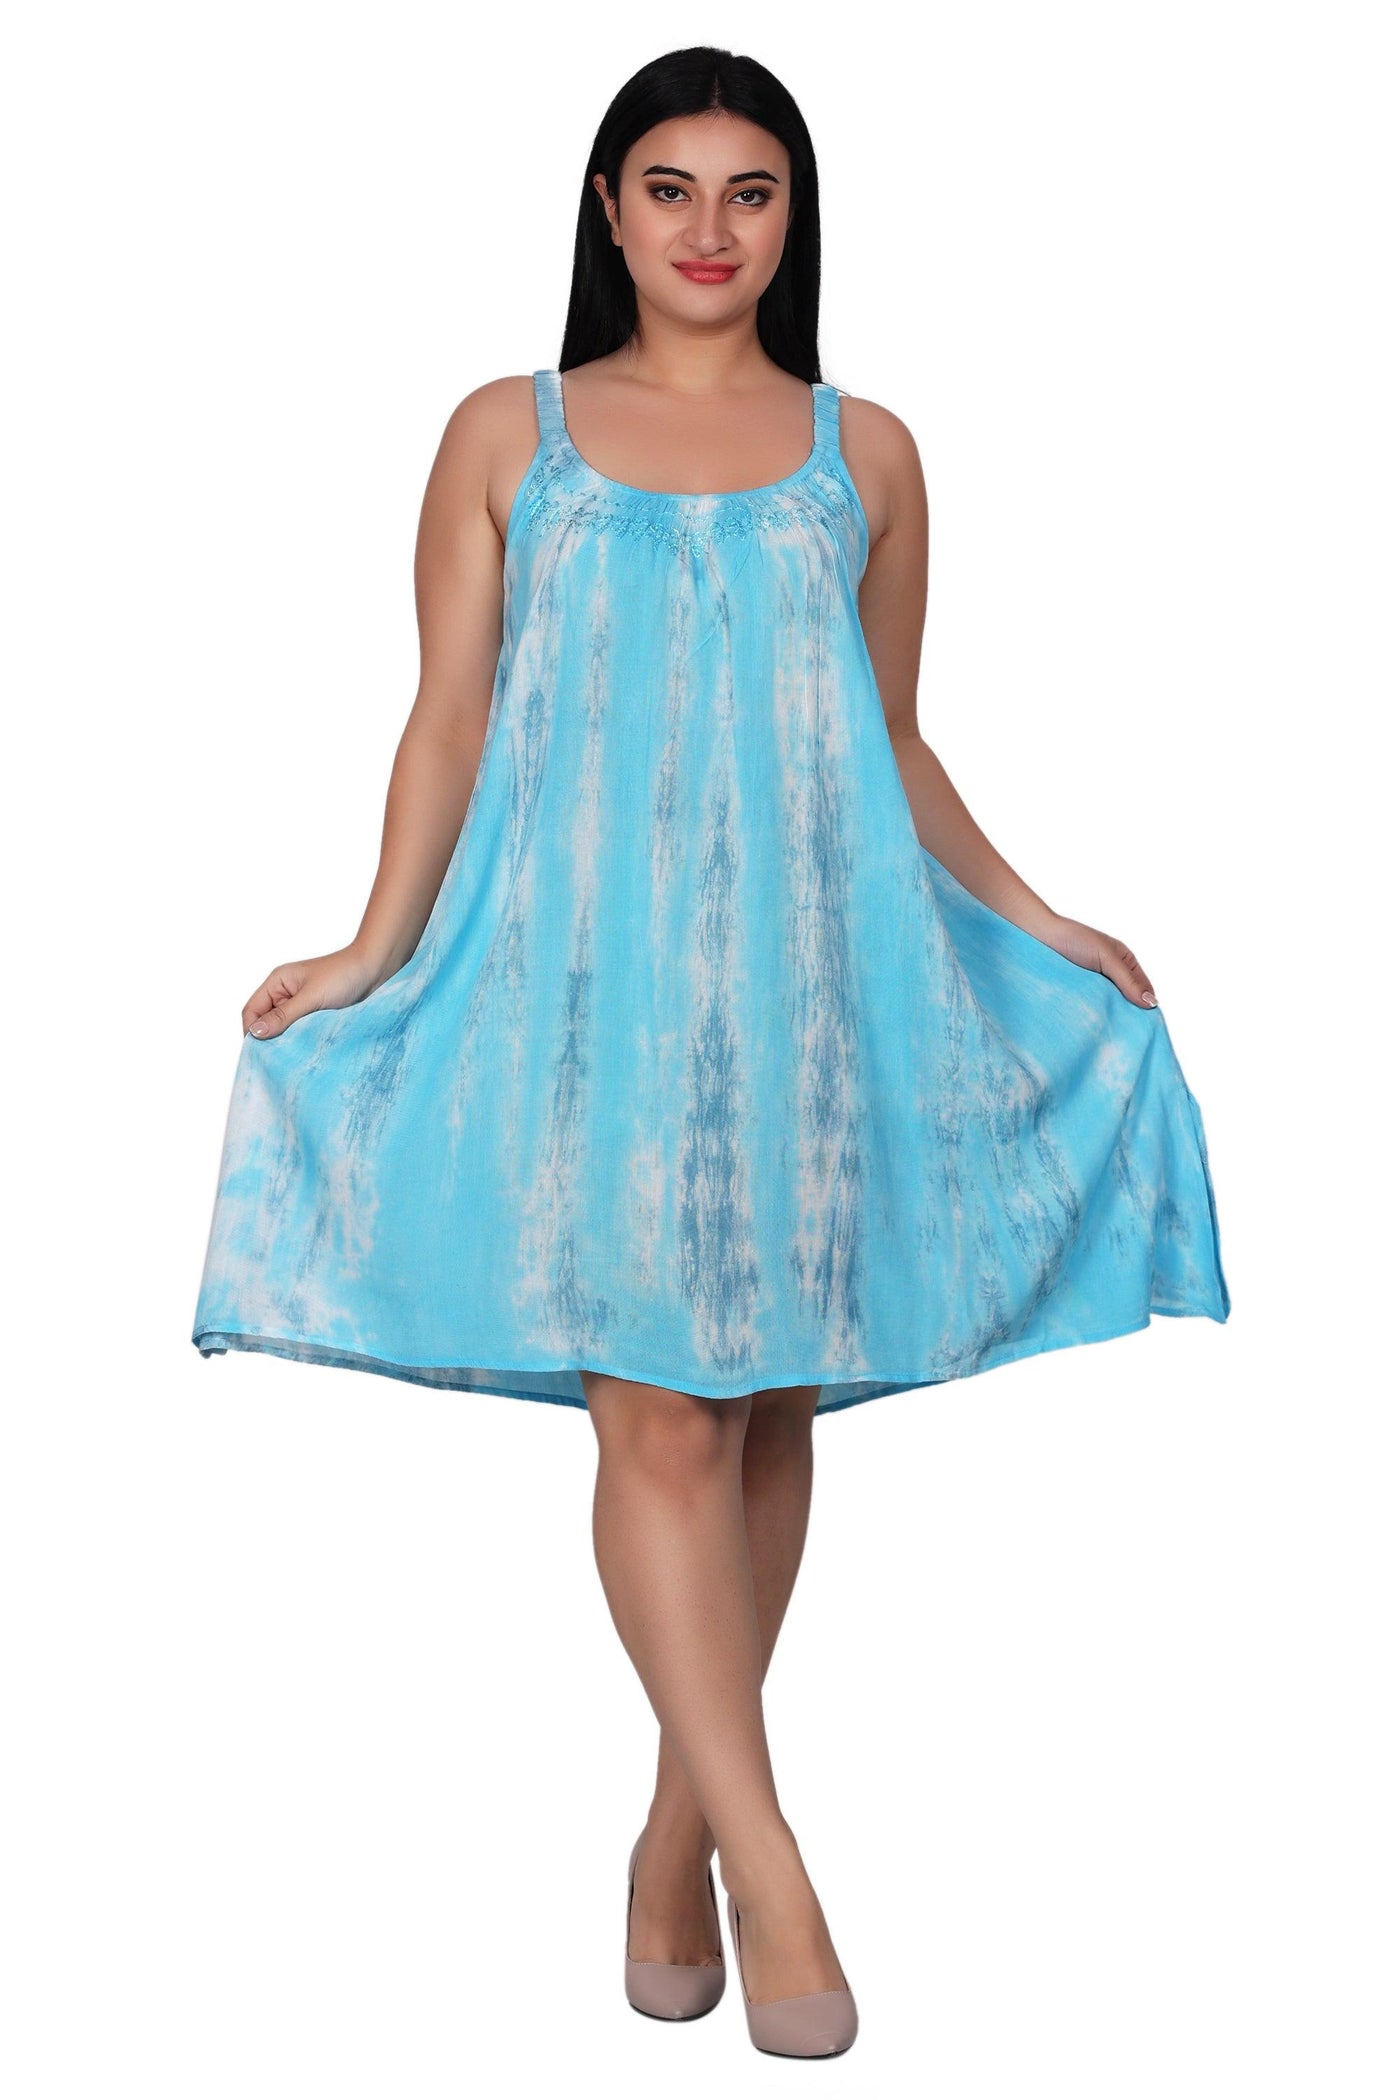 Elastic Strap Tie Dye Dress 362216EN  - Advance Apparels Inc